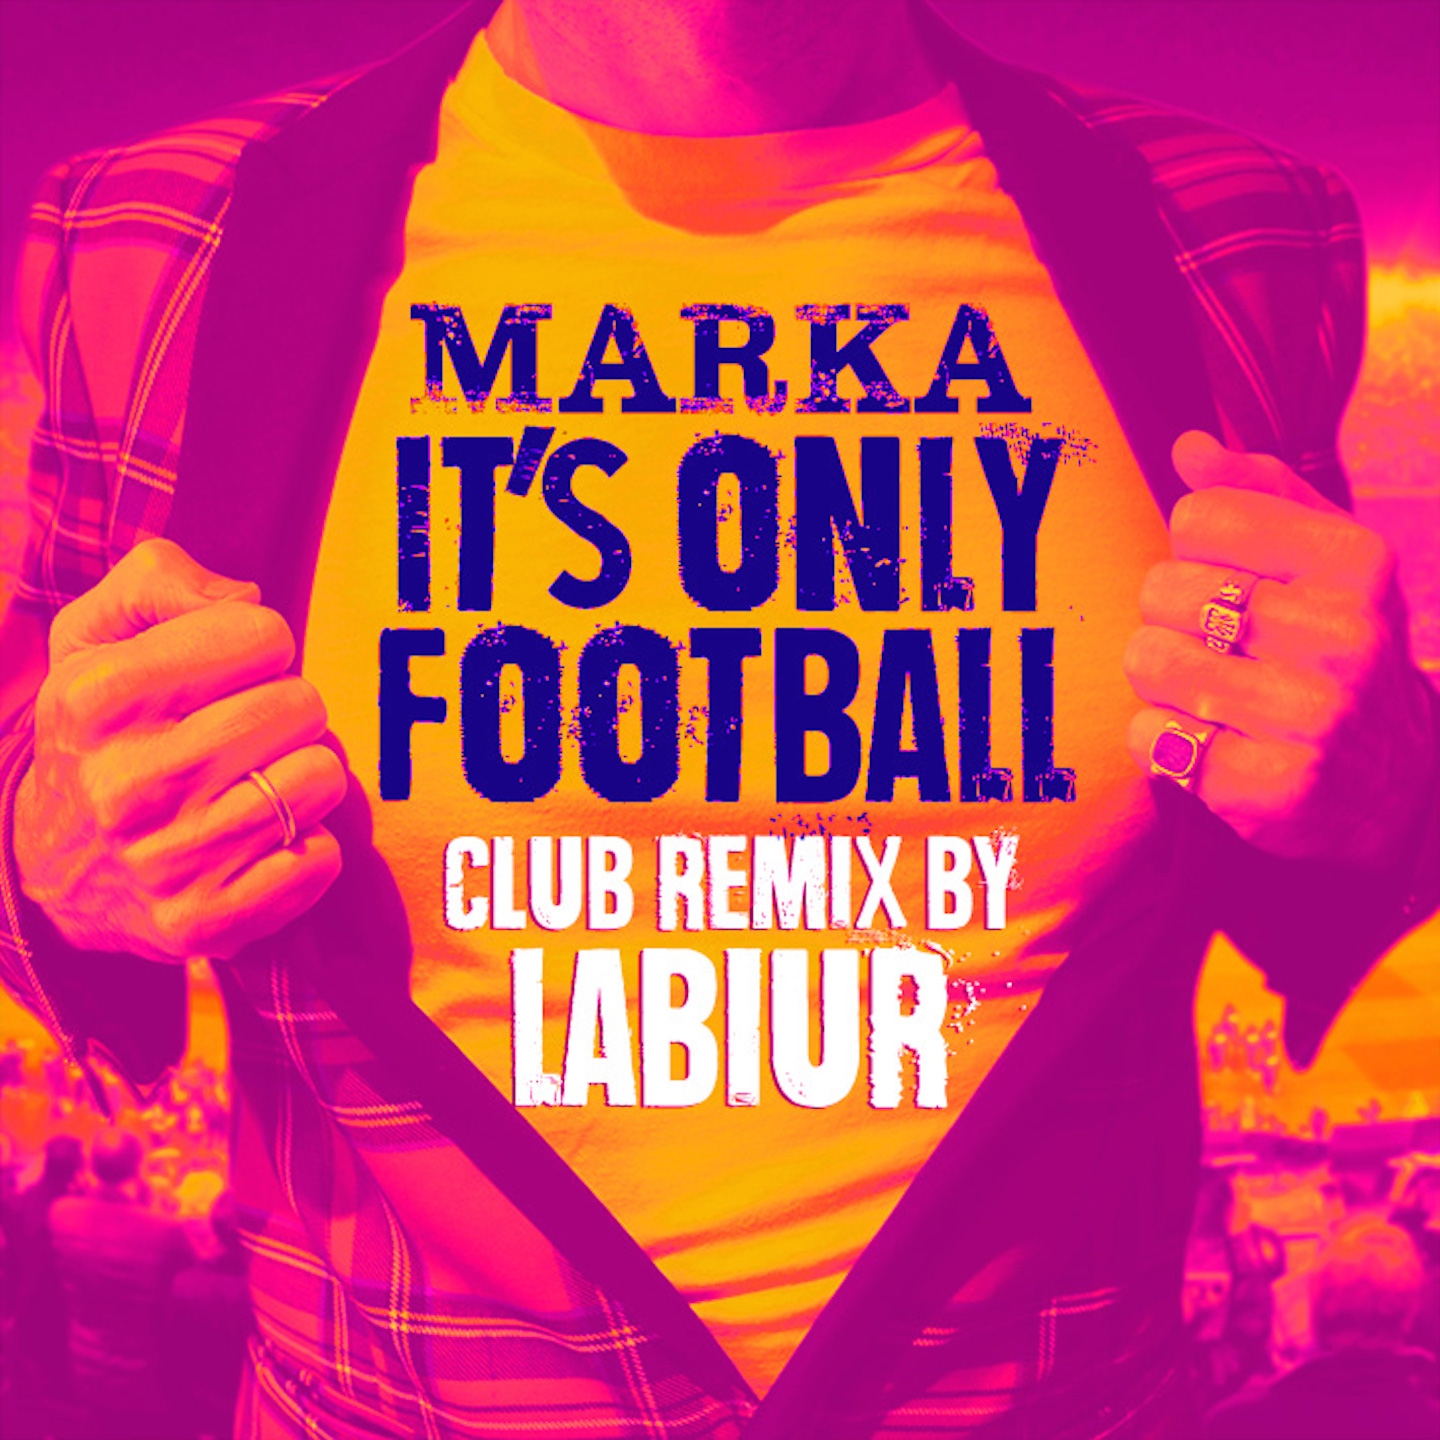 It's Only Football (Labiur Club Remix)